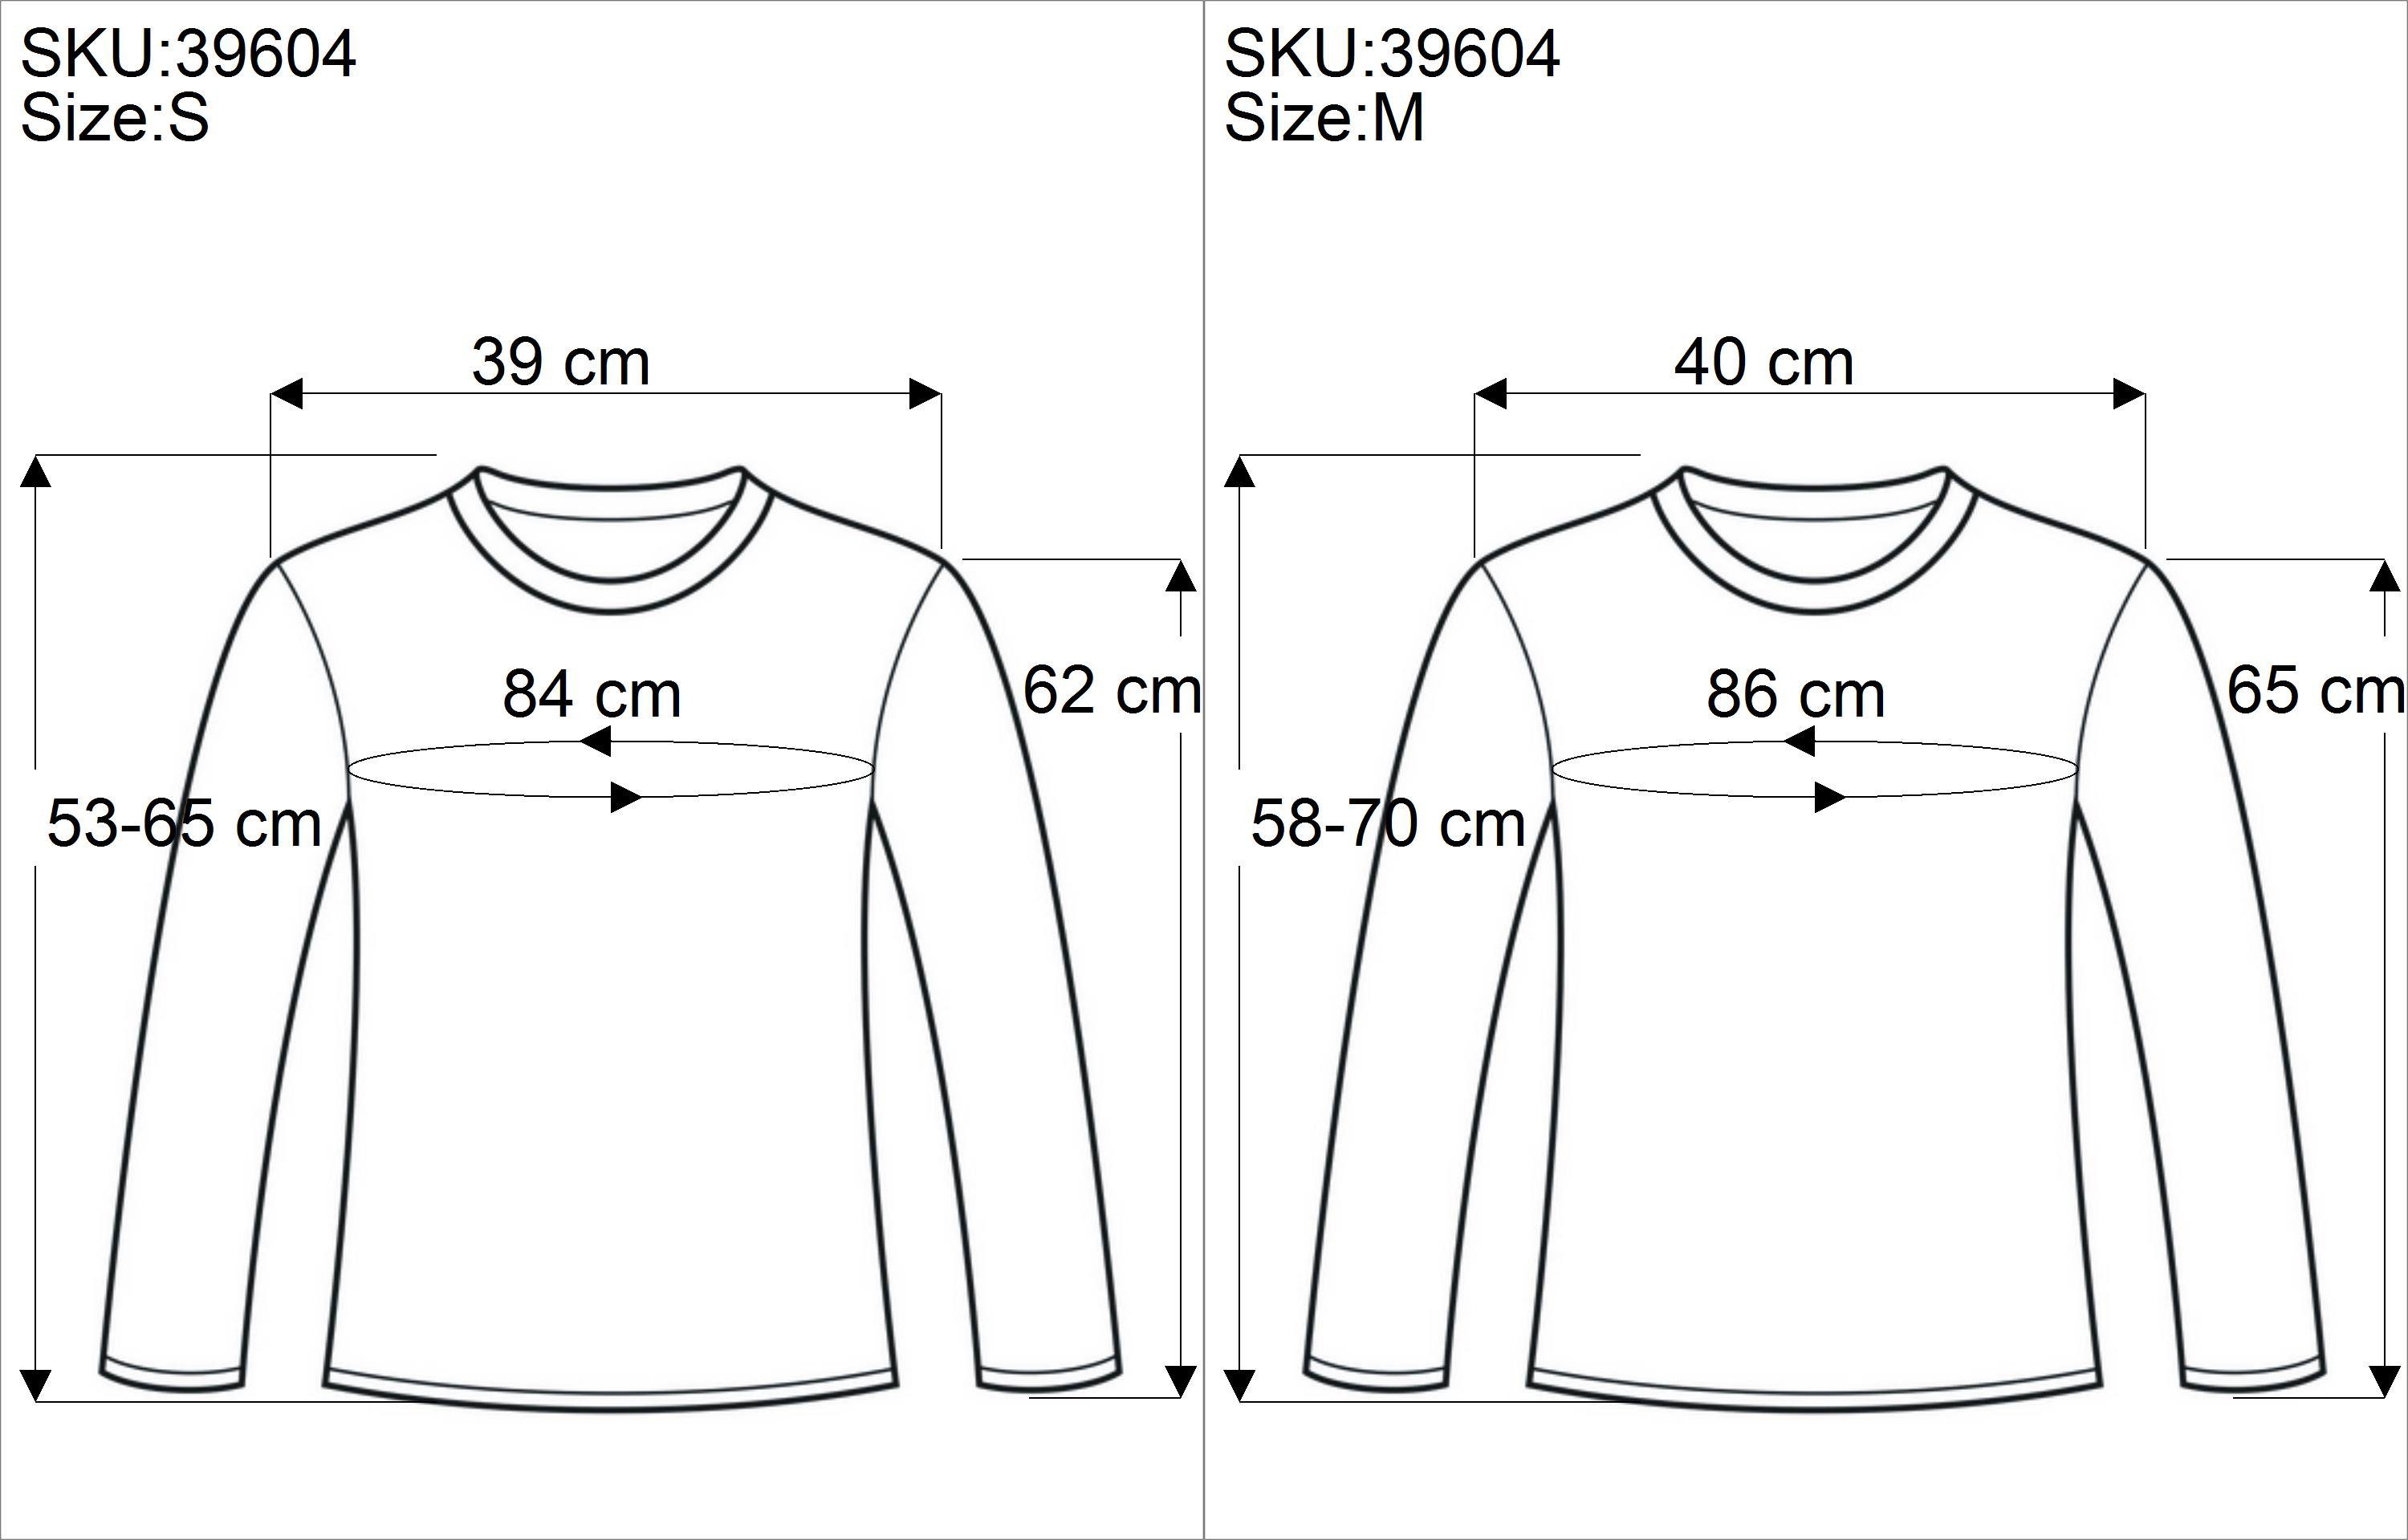 Pixi Guru-Shop Hoody, schwarz alternative Longsleeve Elfen Langarmshirt, Shirt,.. Bekleidung